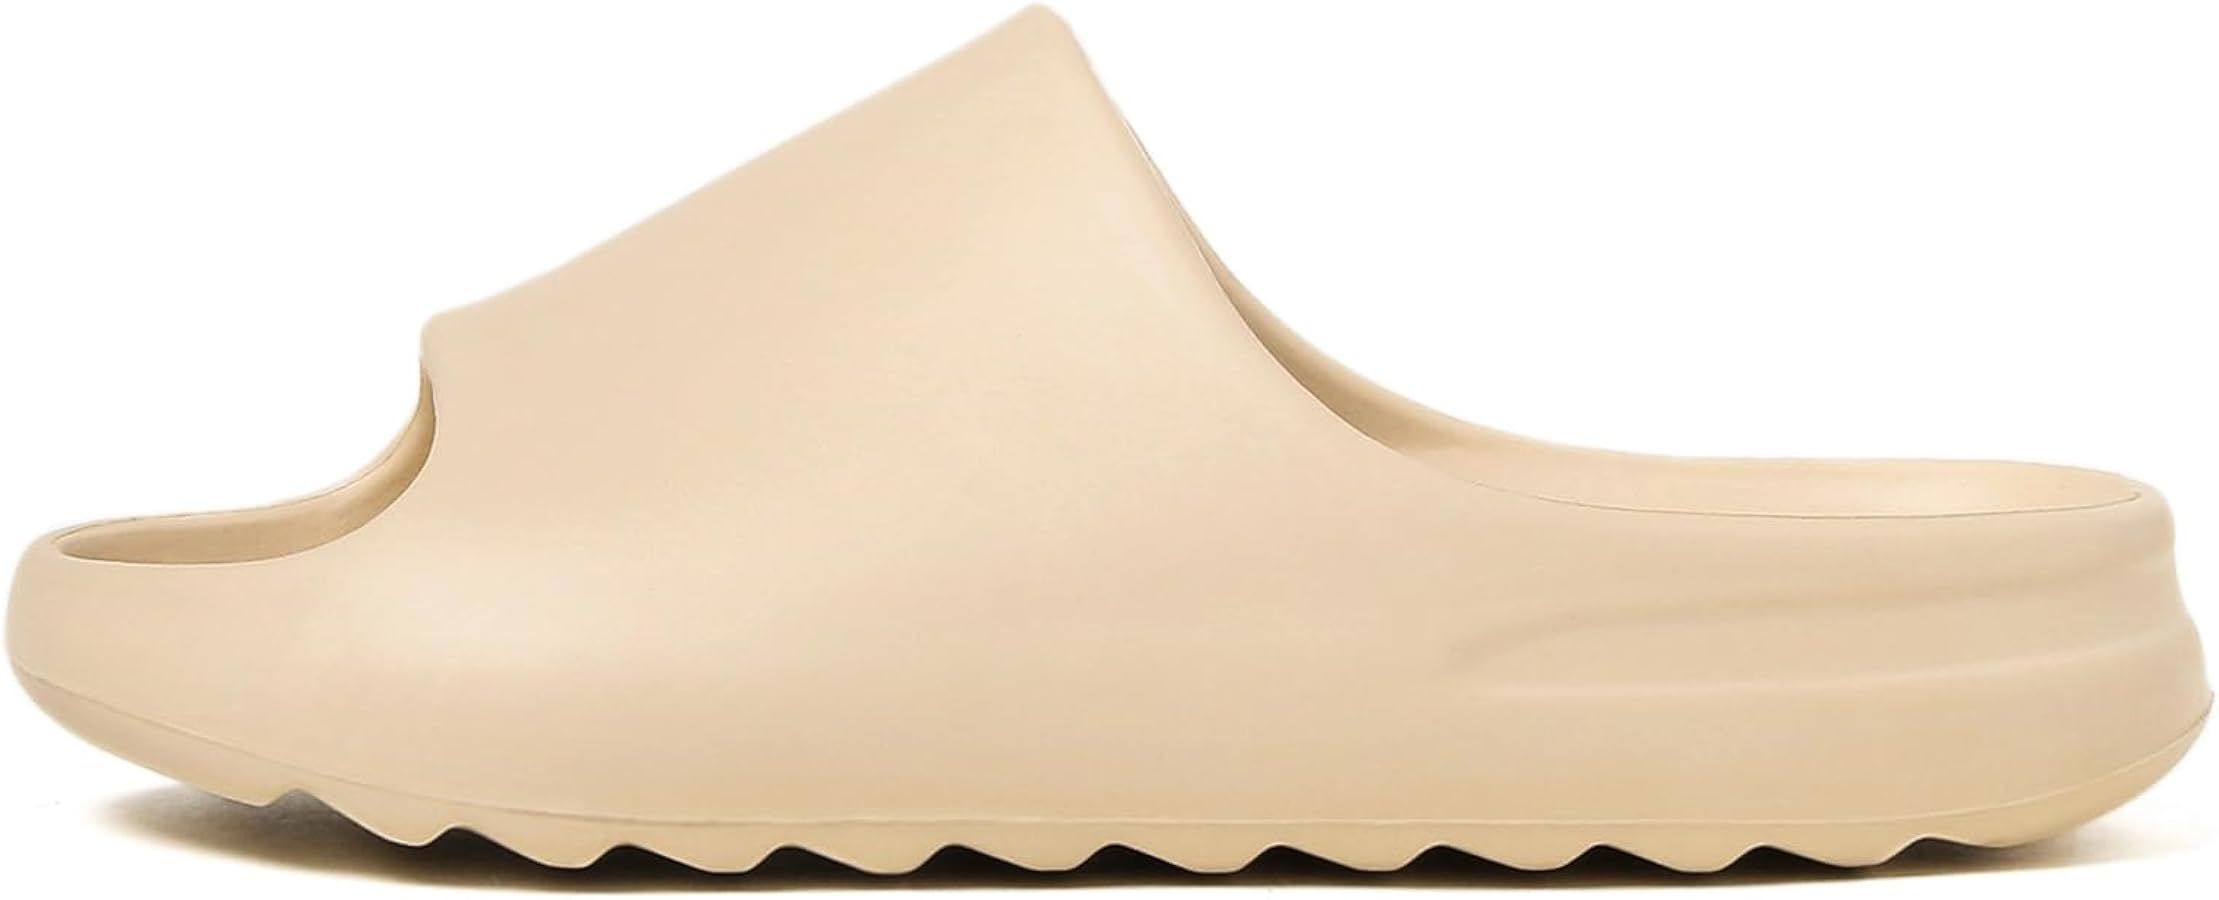 Cloud Slides Slippers for Men and Women, Super Soft Comfort Lightweight Pillow Slippers, Unisex T... | Amazon (US)